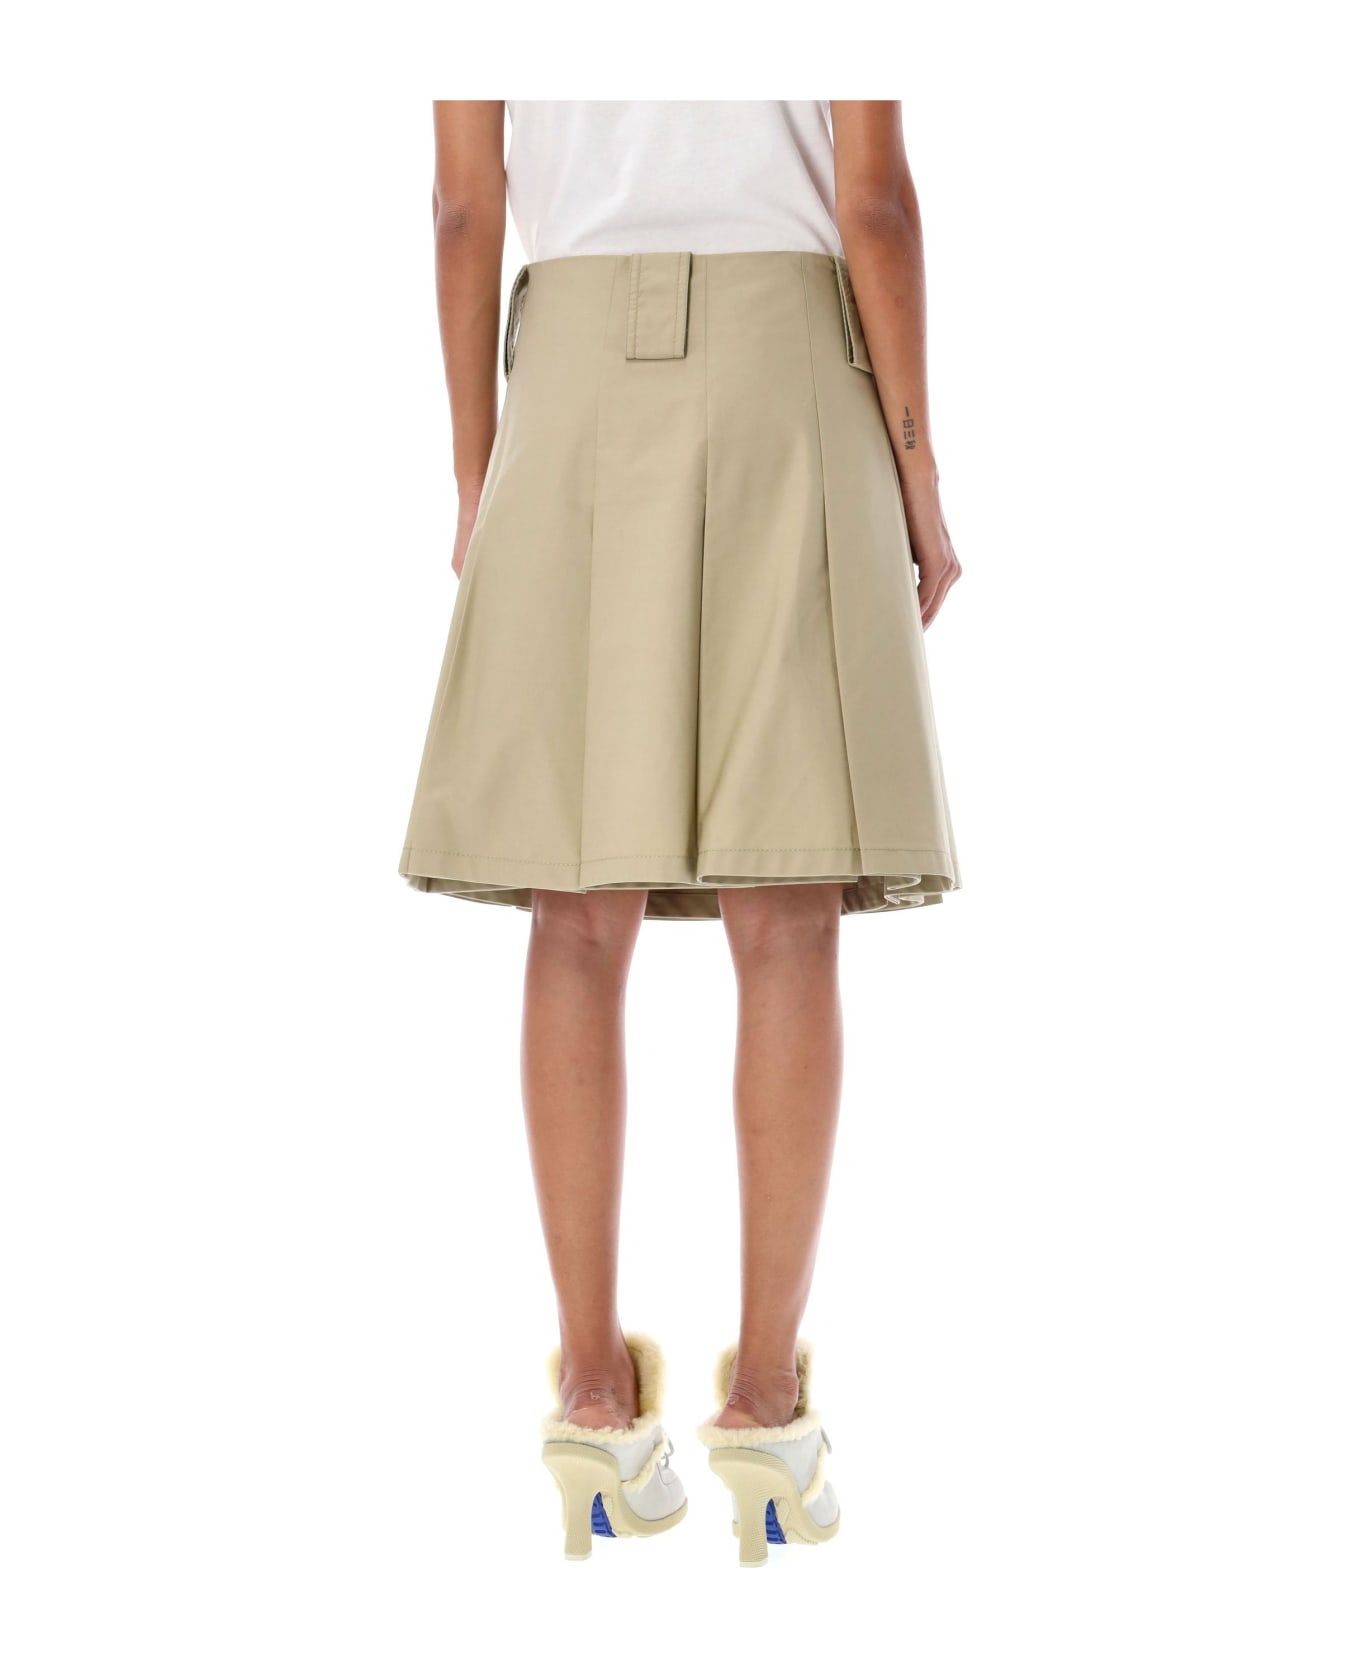 Burberry London Pleated Skirt - HUNTER